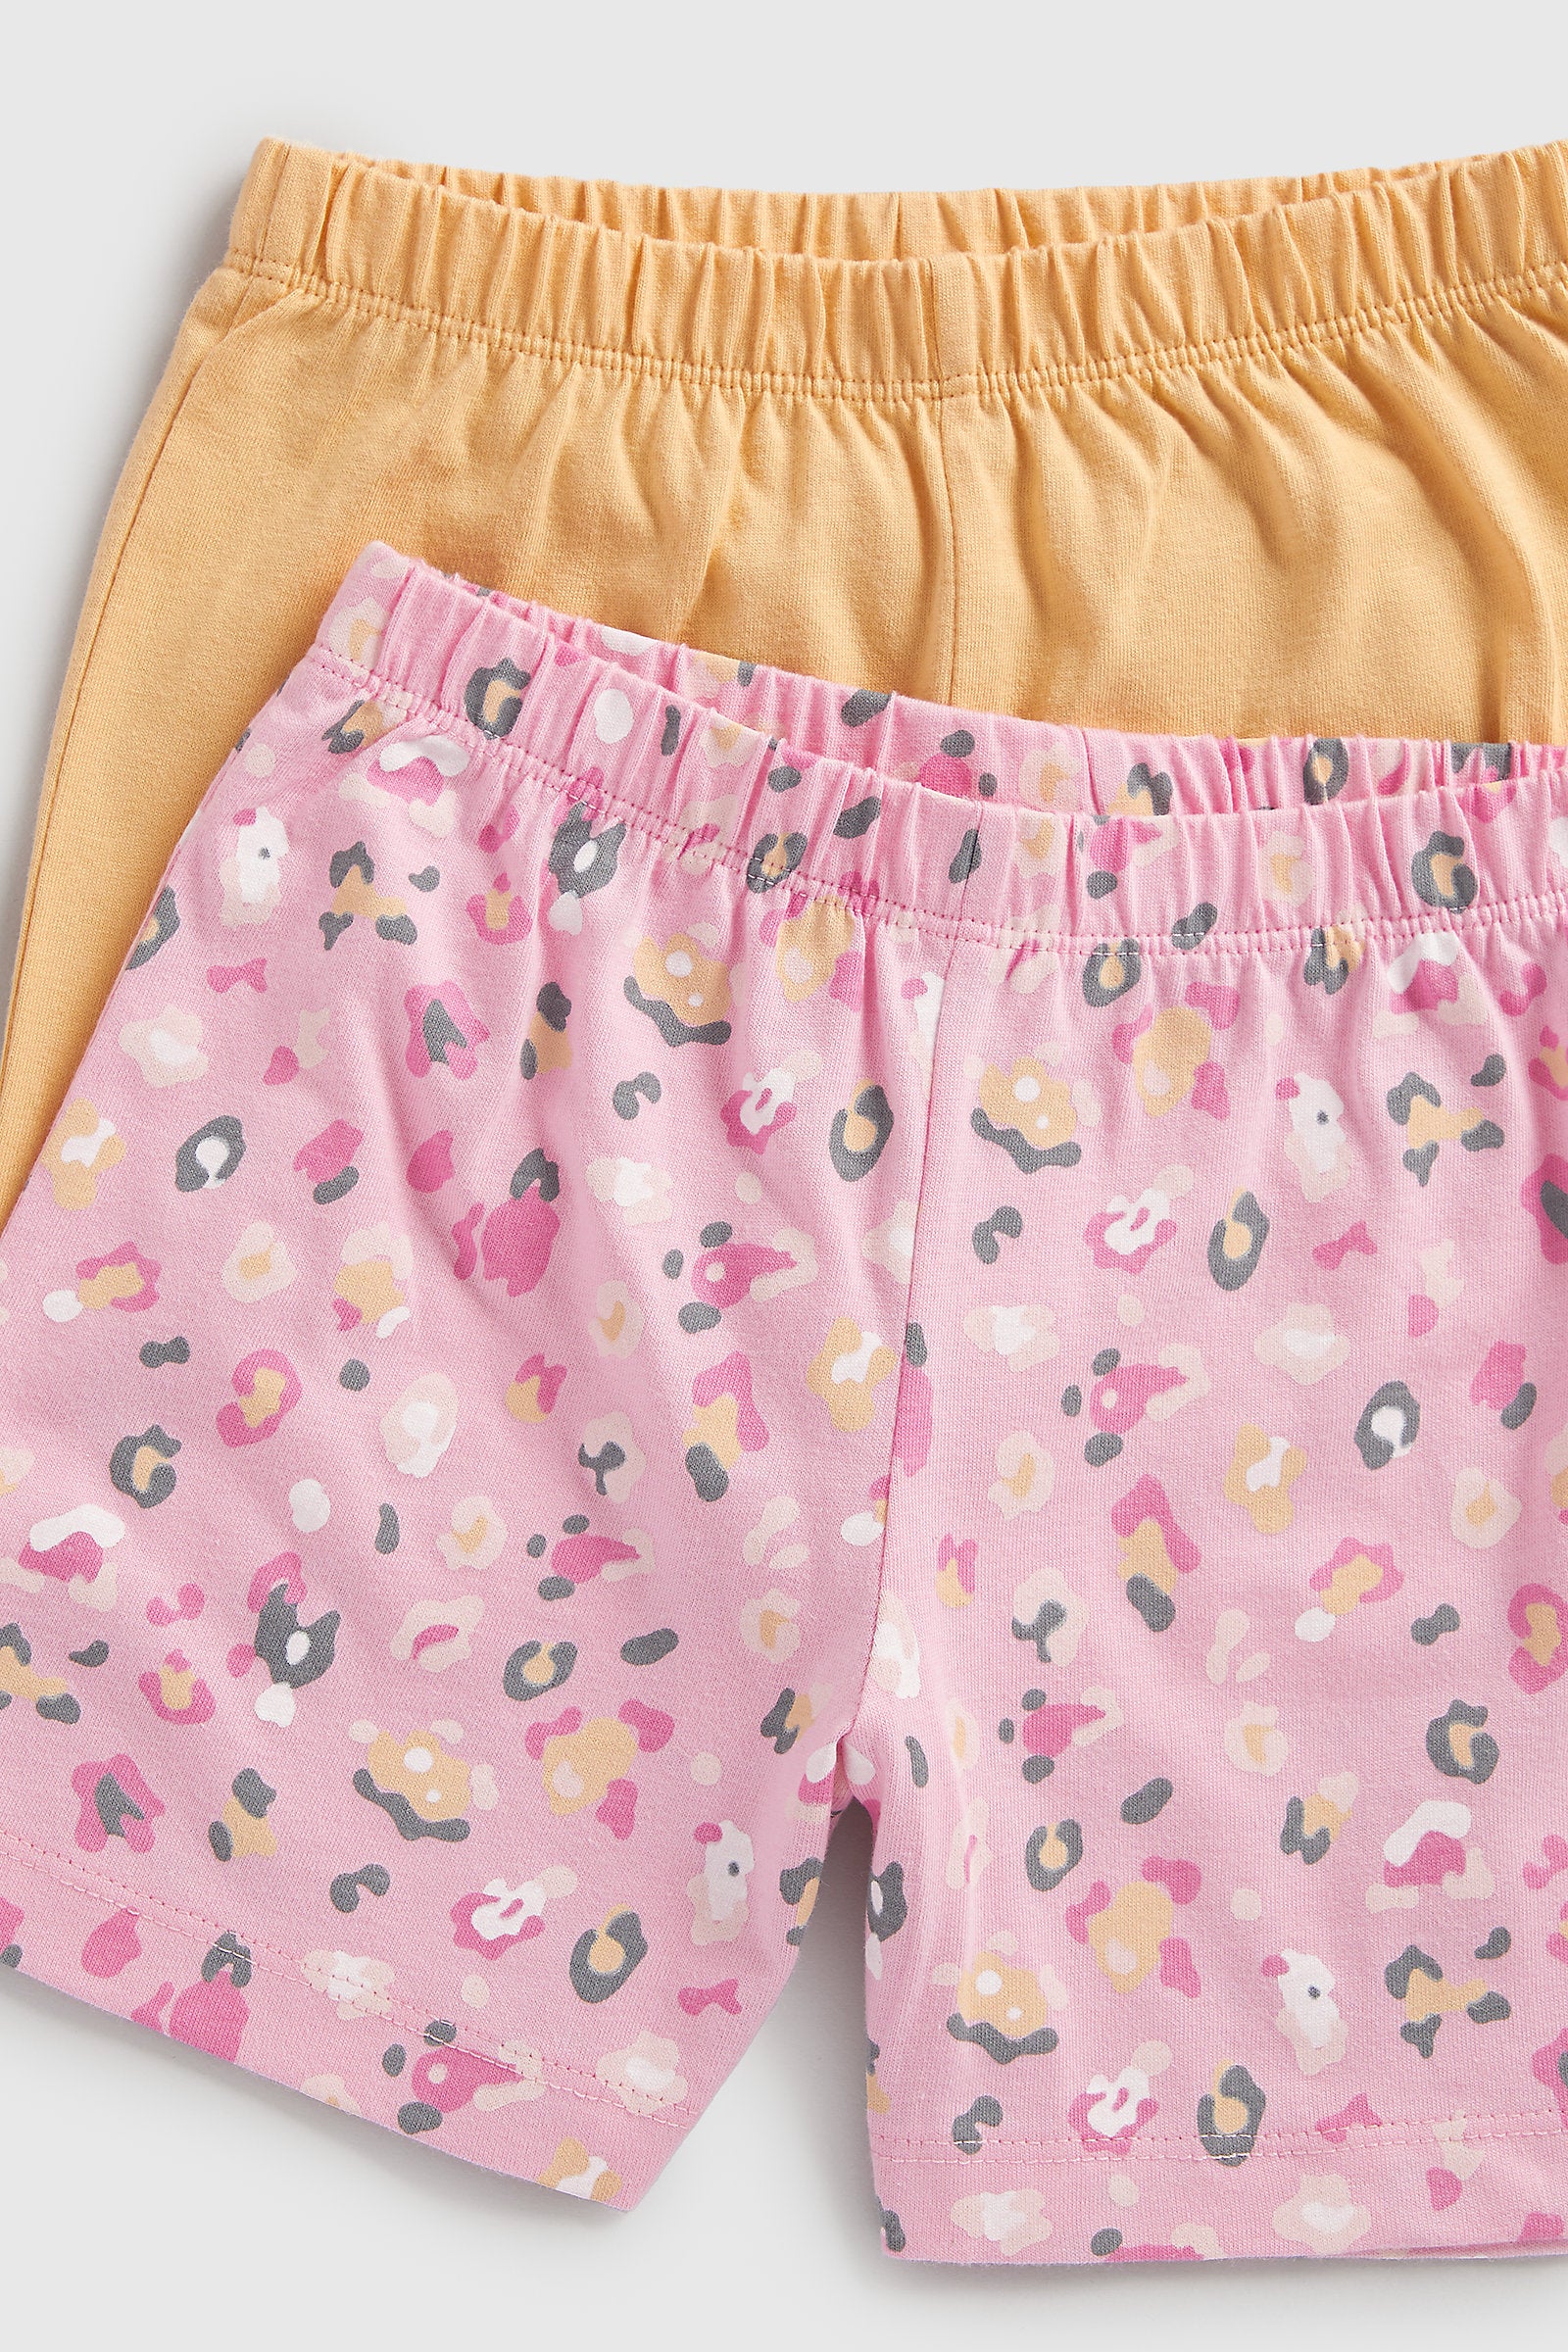 Mothercare Leopard Shortie Pyjamas - 2 Pack